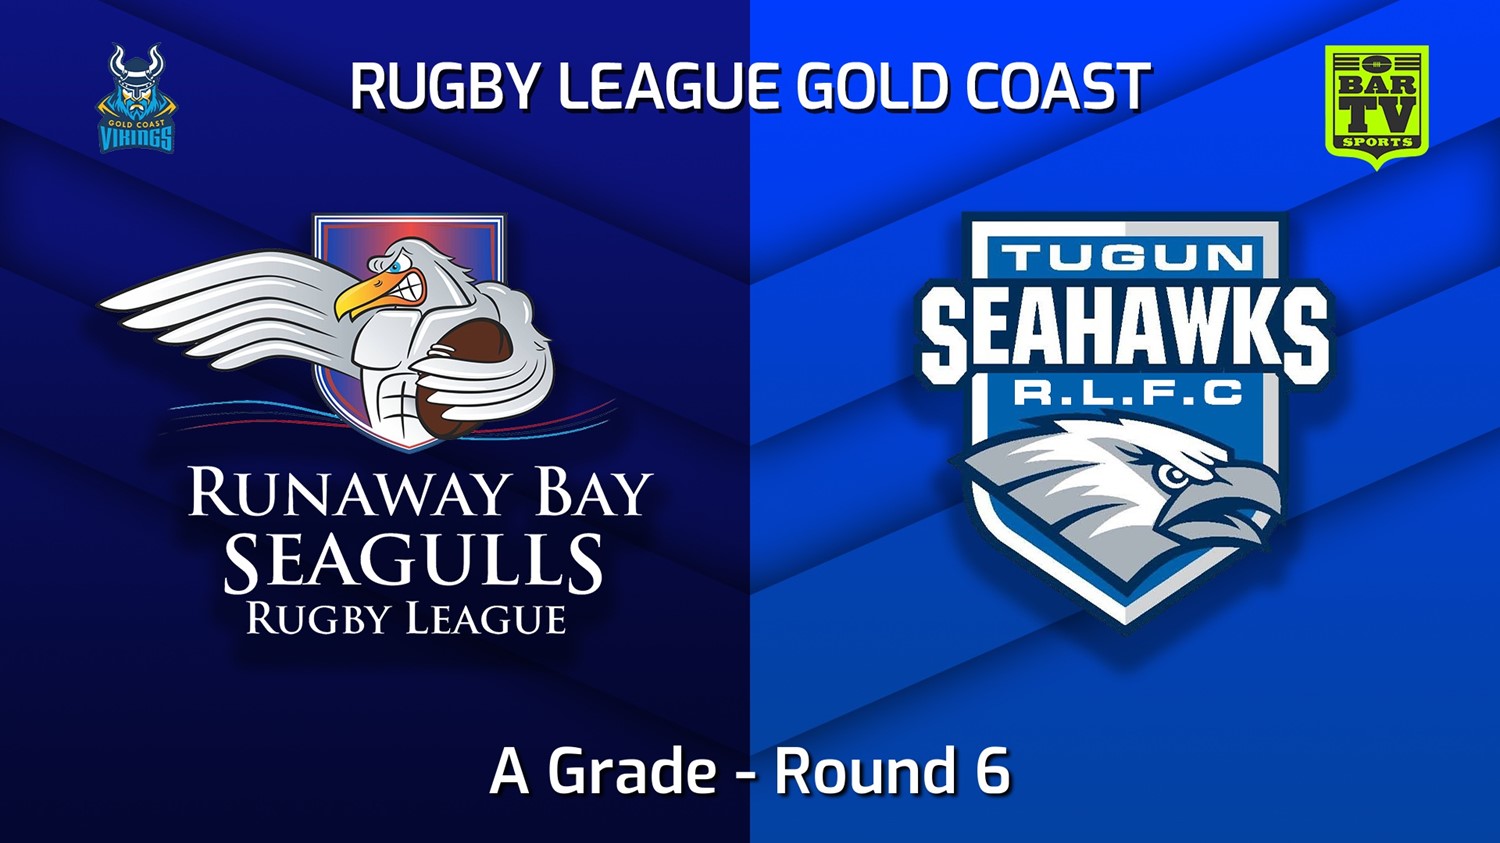 220515-Gold Coast Round 6 - A Grade - Runaway Bay Seagulls v Tugun Seahawks (1) Slate Image